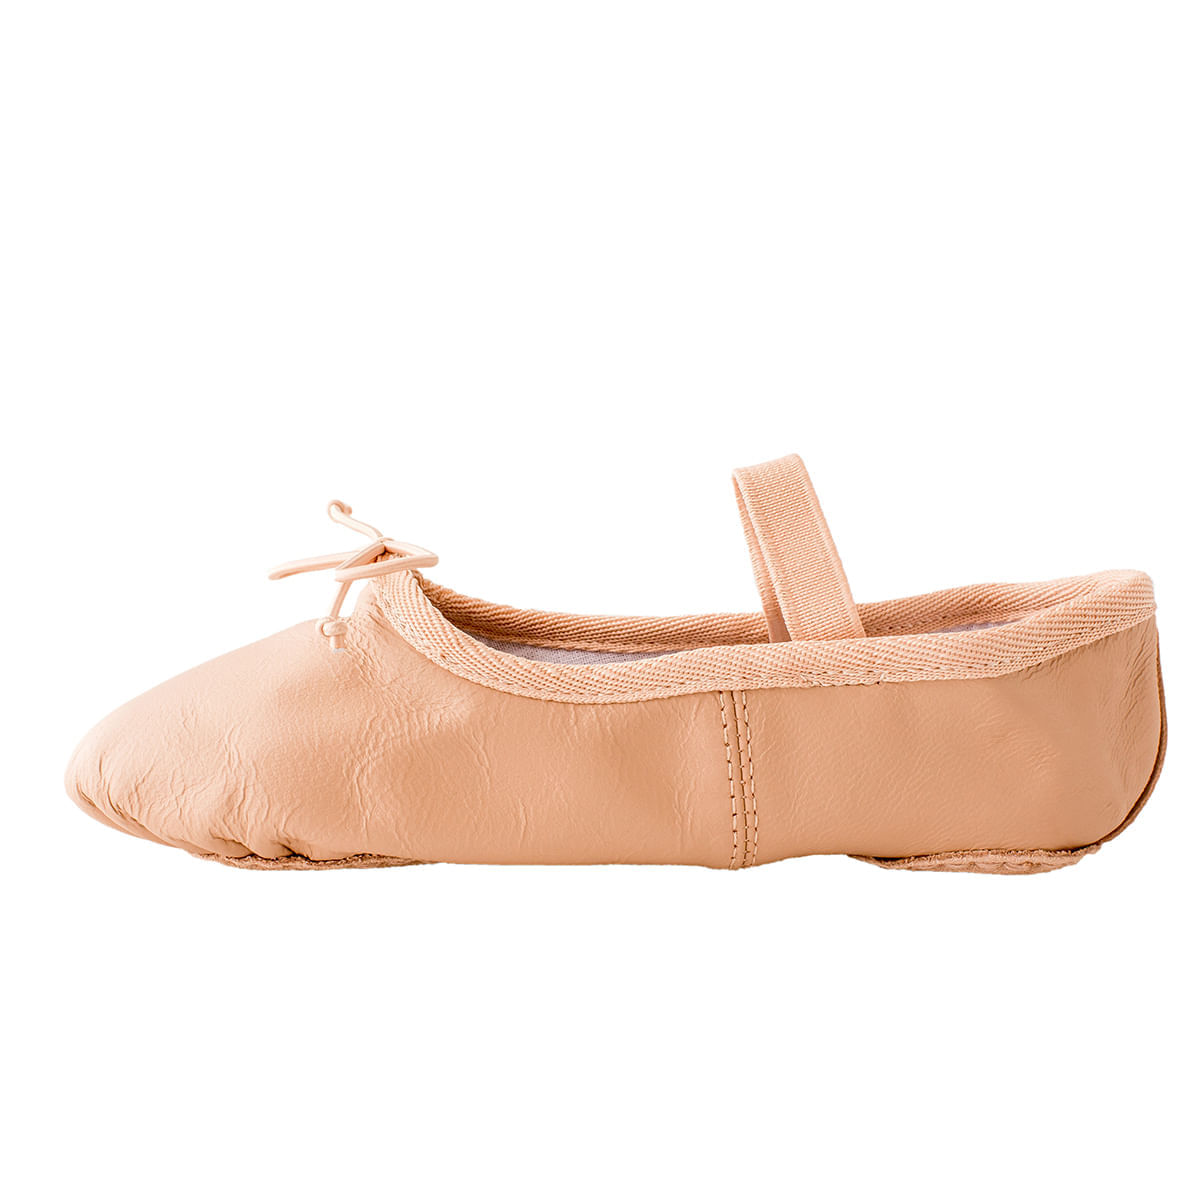 IIGDance Children’s Ballet Dance Shoes Classic Gym Yoga Flats for Girls,Boys,Kid,Women